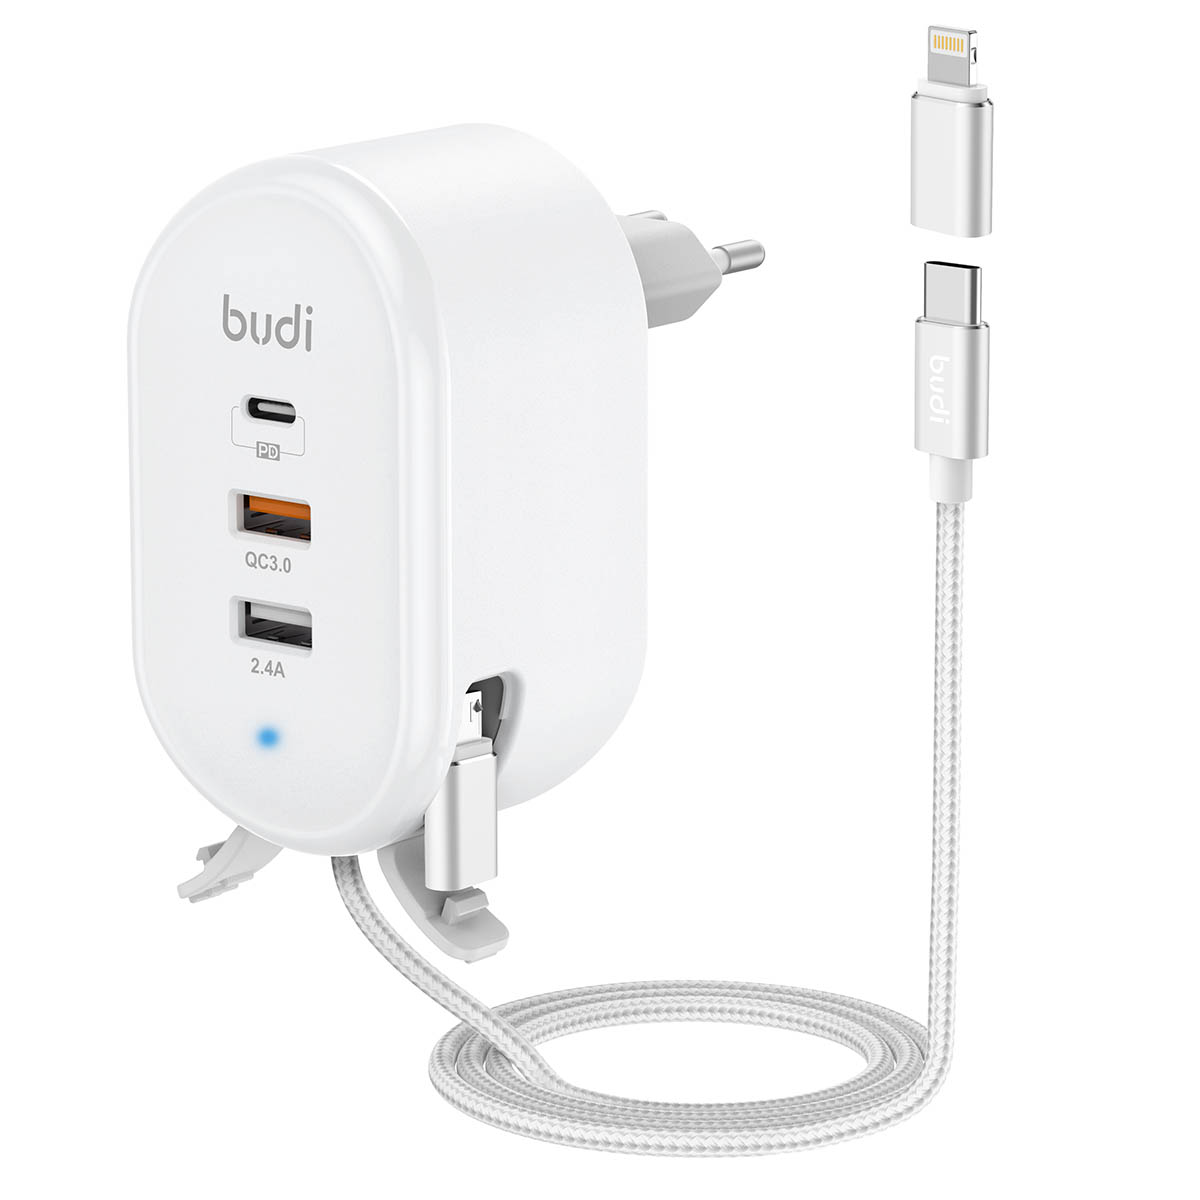 СЗУ (Сетевое зарядное устройство) BUDI, PD 18W, QC 18W, USB, кабель Type C, длина 1 метр, цвет белый